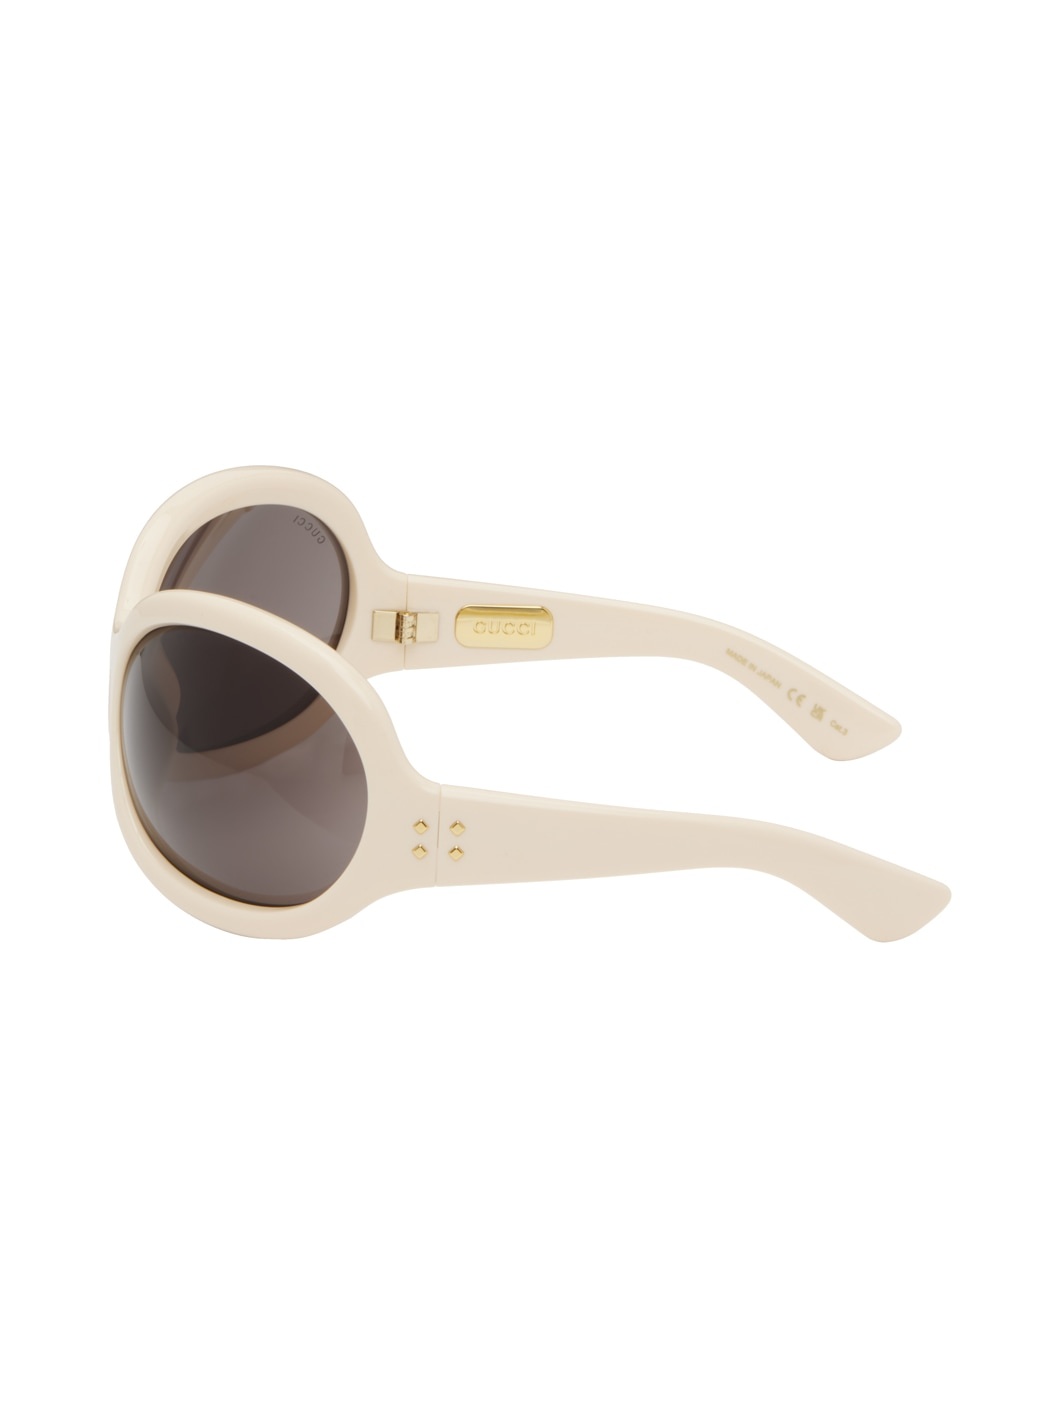 Off-White Oval Sunglasses - 3